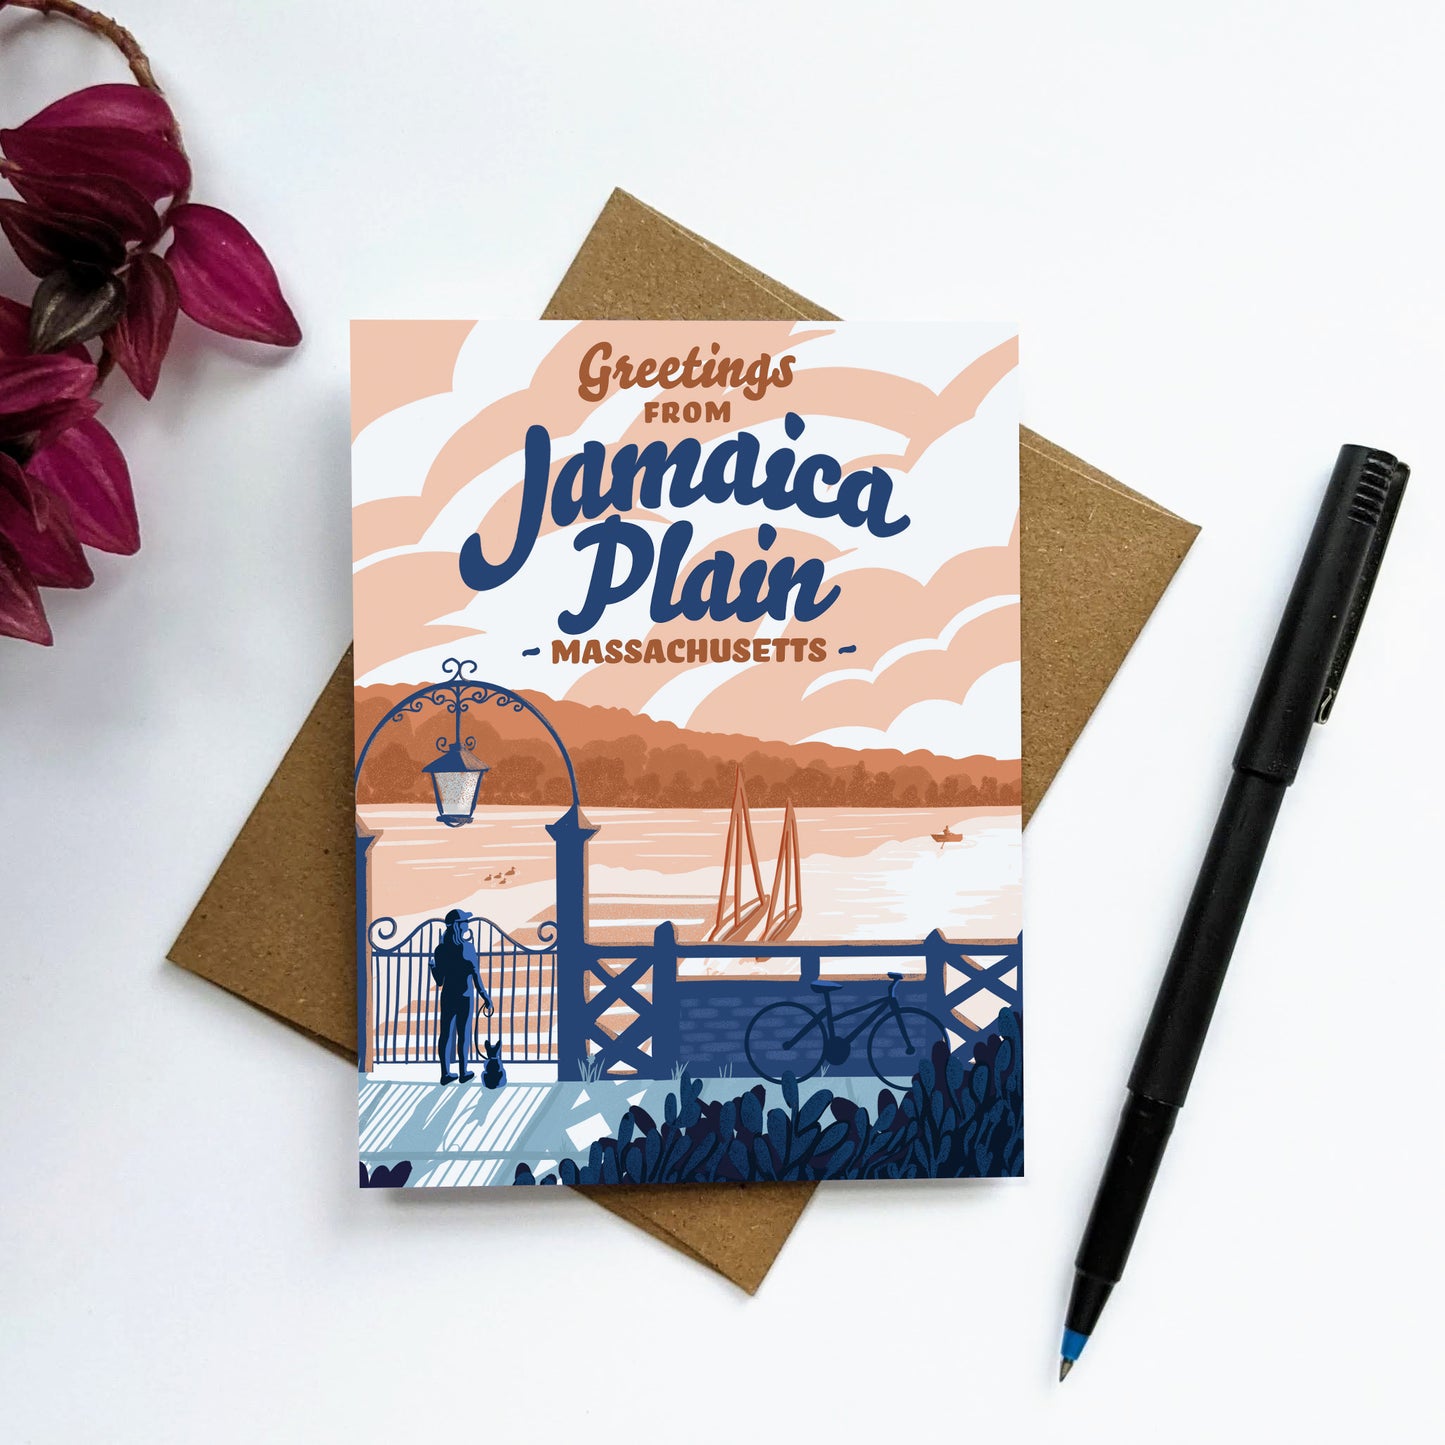 "Greetings from Jamaica Plain, MA" Greeting Card